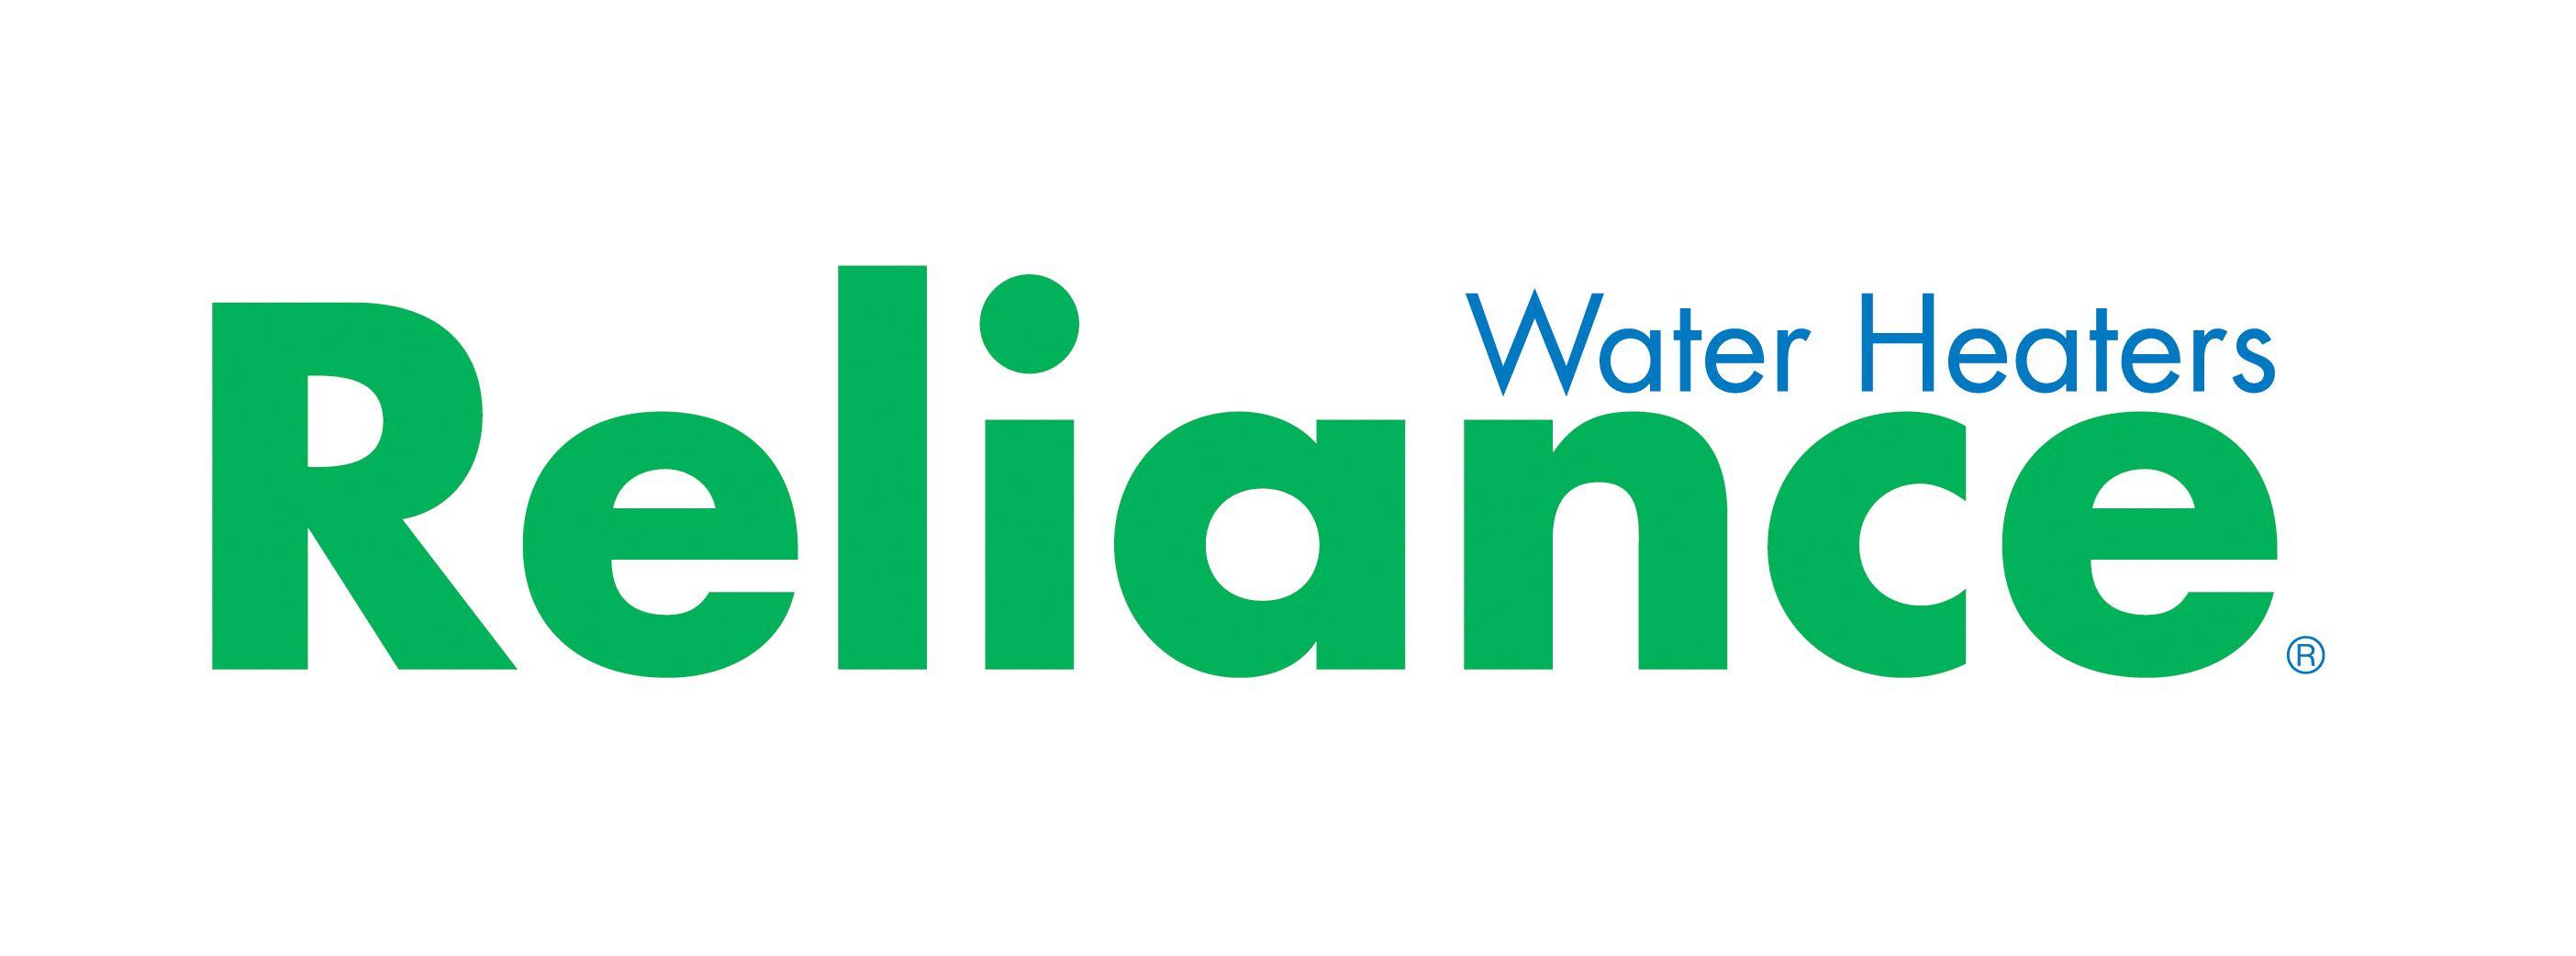 Reliance Logo - Reliance Water Heaters - Your Neighborhood Water Heater Source